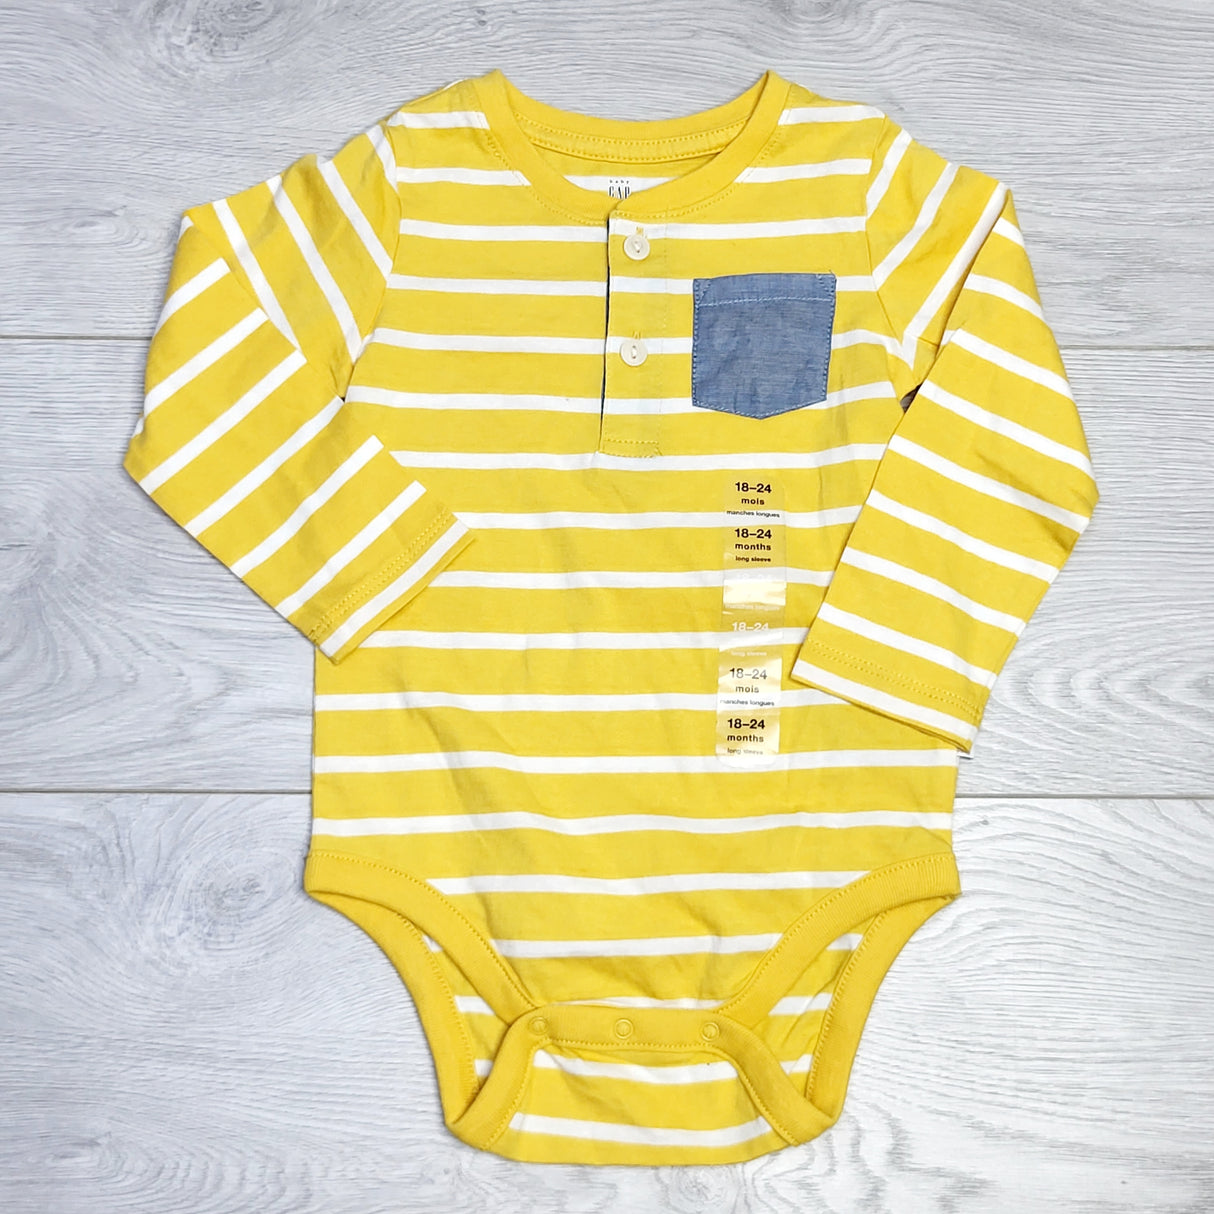 DMKY1 - NEW - Gap yellow striped onesie. Size 18-24 months